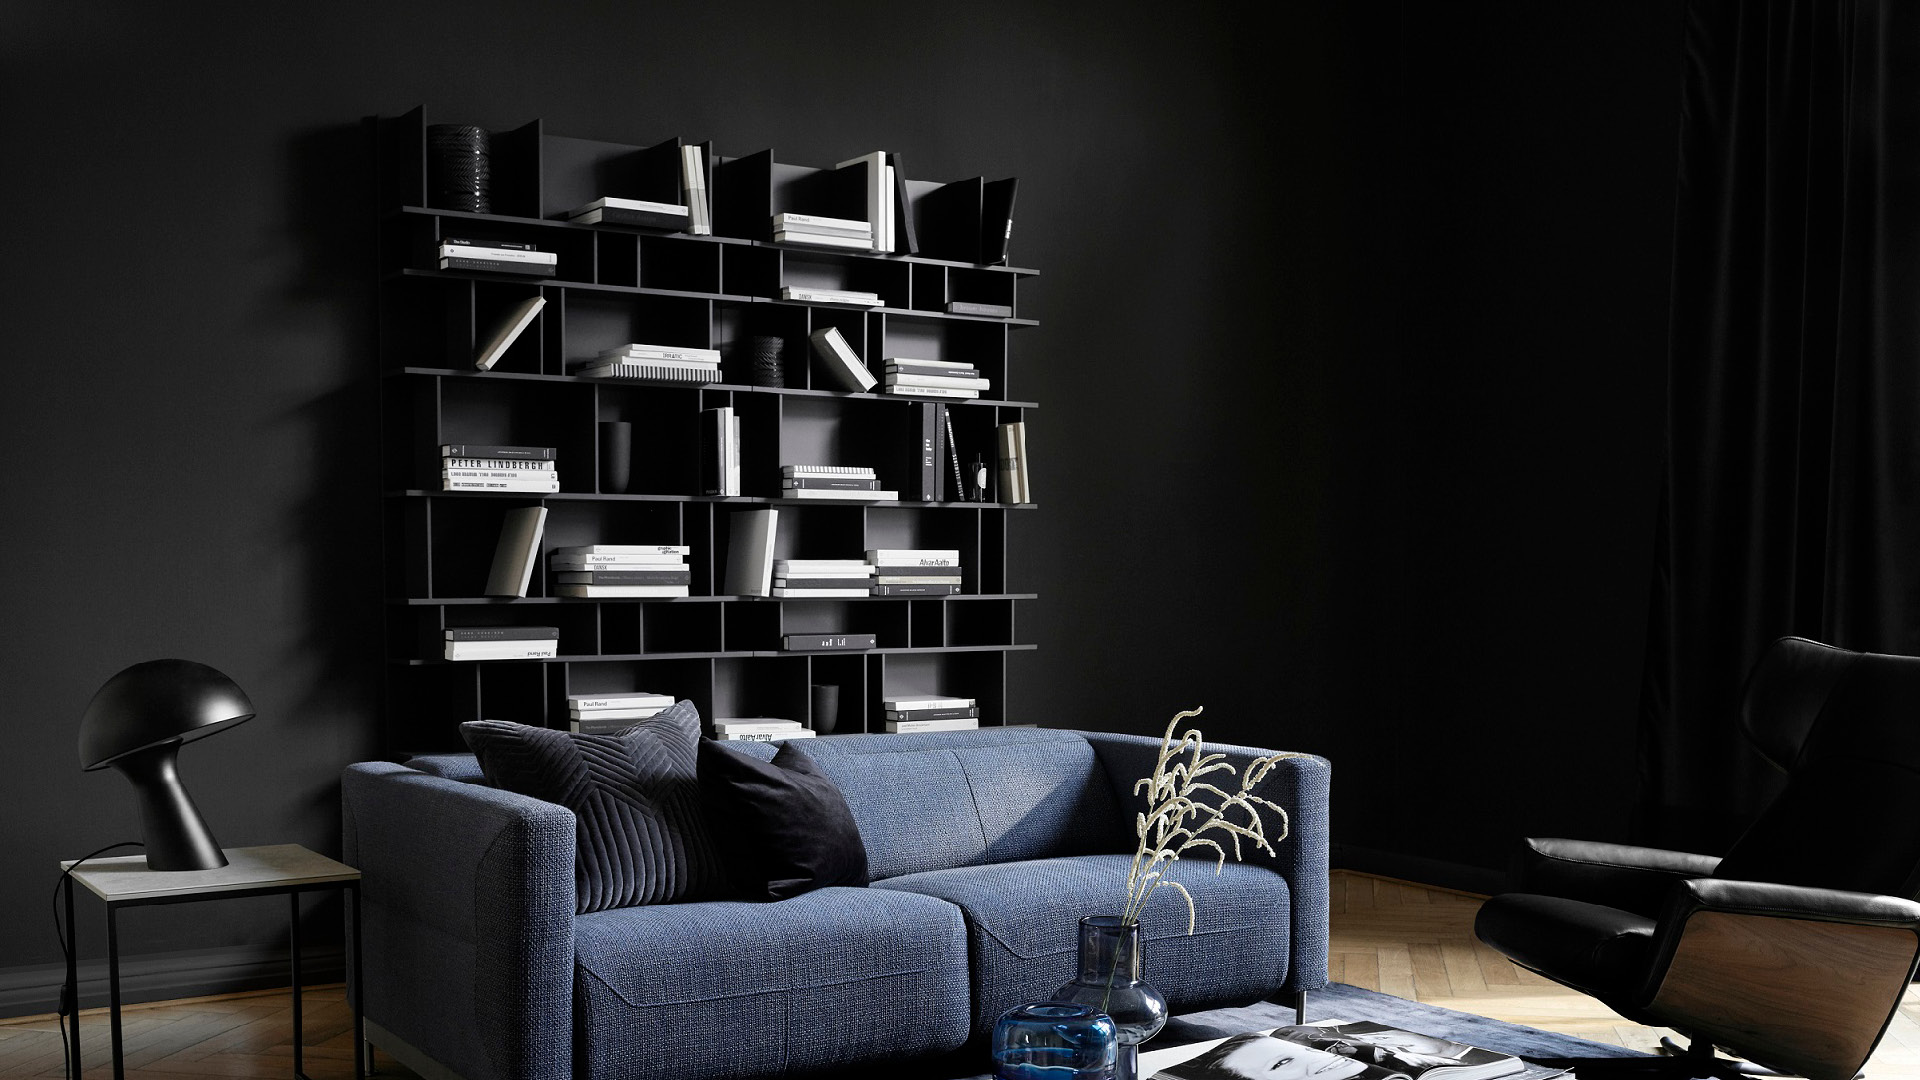 Boconcept S Latest Furniture Releases Intertwine Elegance